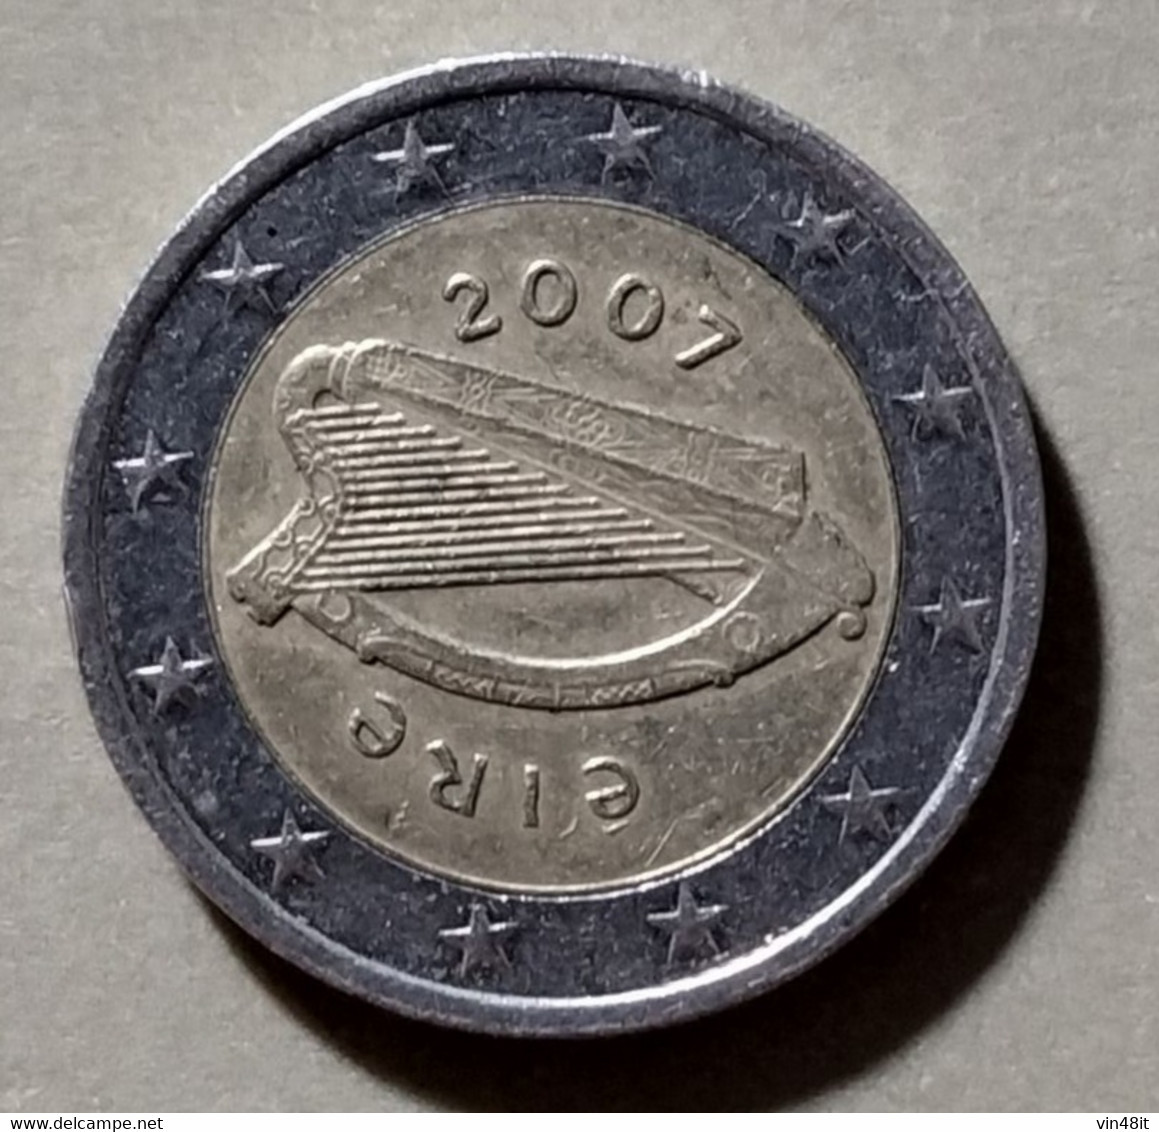 2007 - IRLANDA  - MONETA IN EURO - DEL VALORE DI  2,00  EURO   - USATA - Ireland